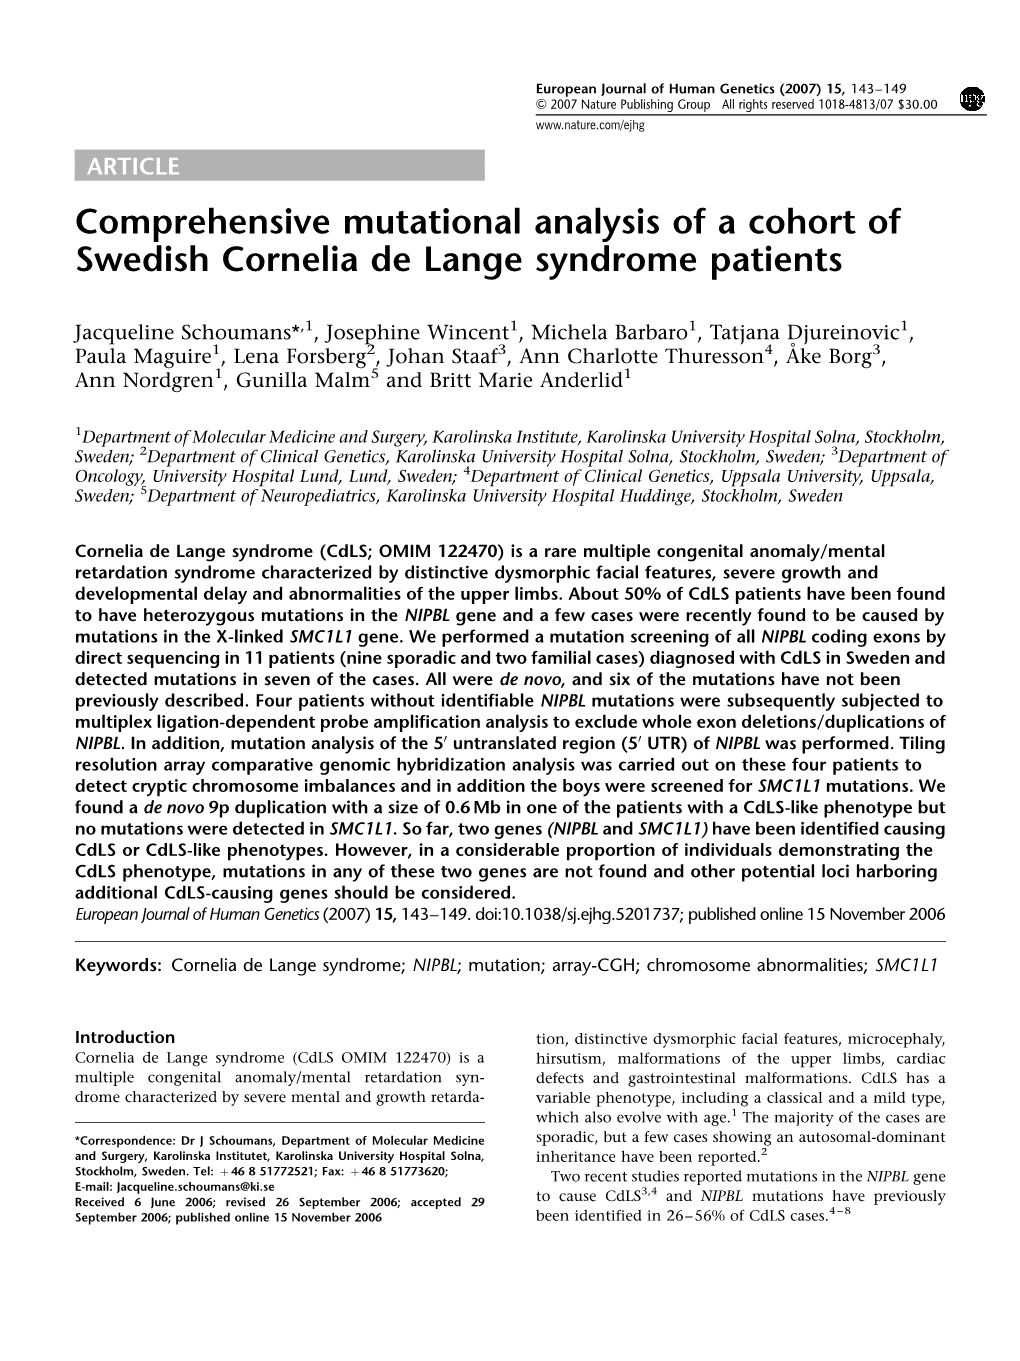 Comprehensive Mutational Analysis of a Cohort of Swedish Cornelia De Lange Syndrome Patients